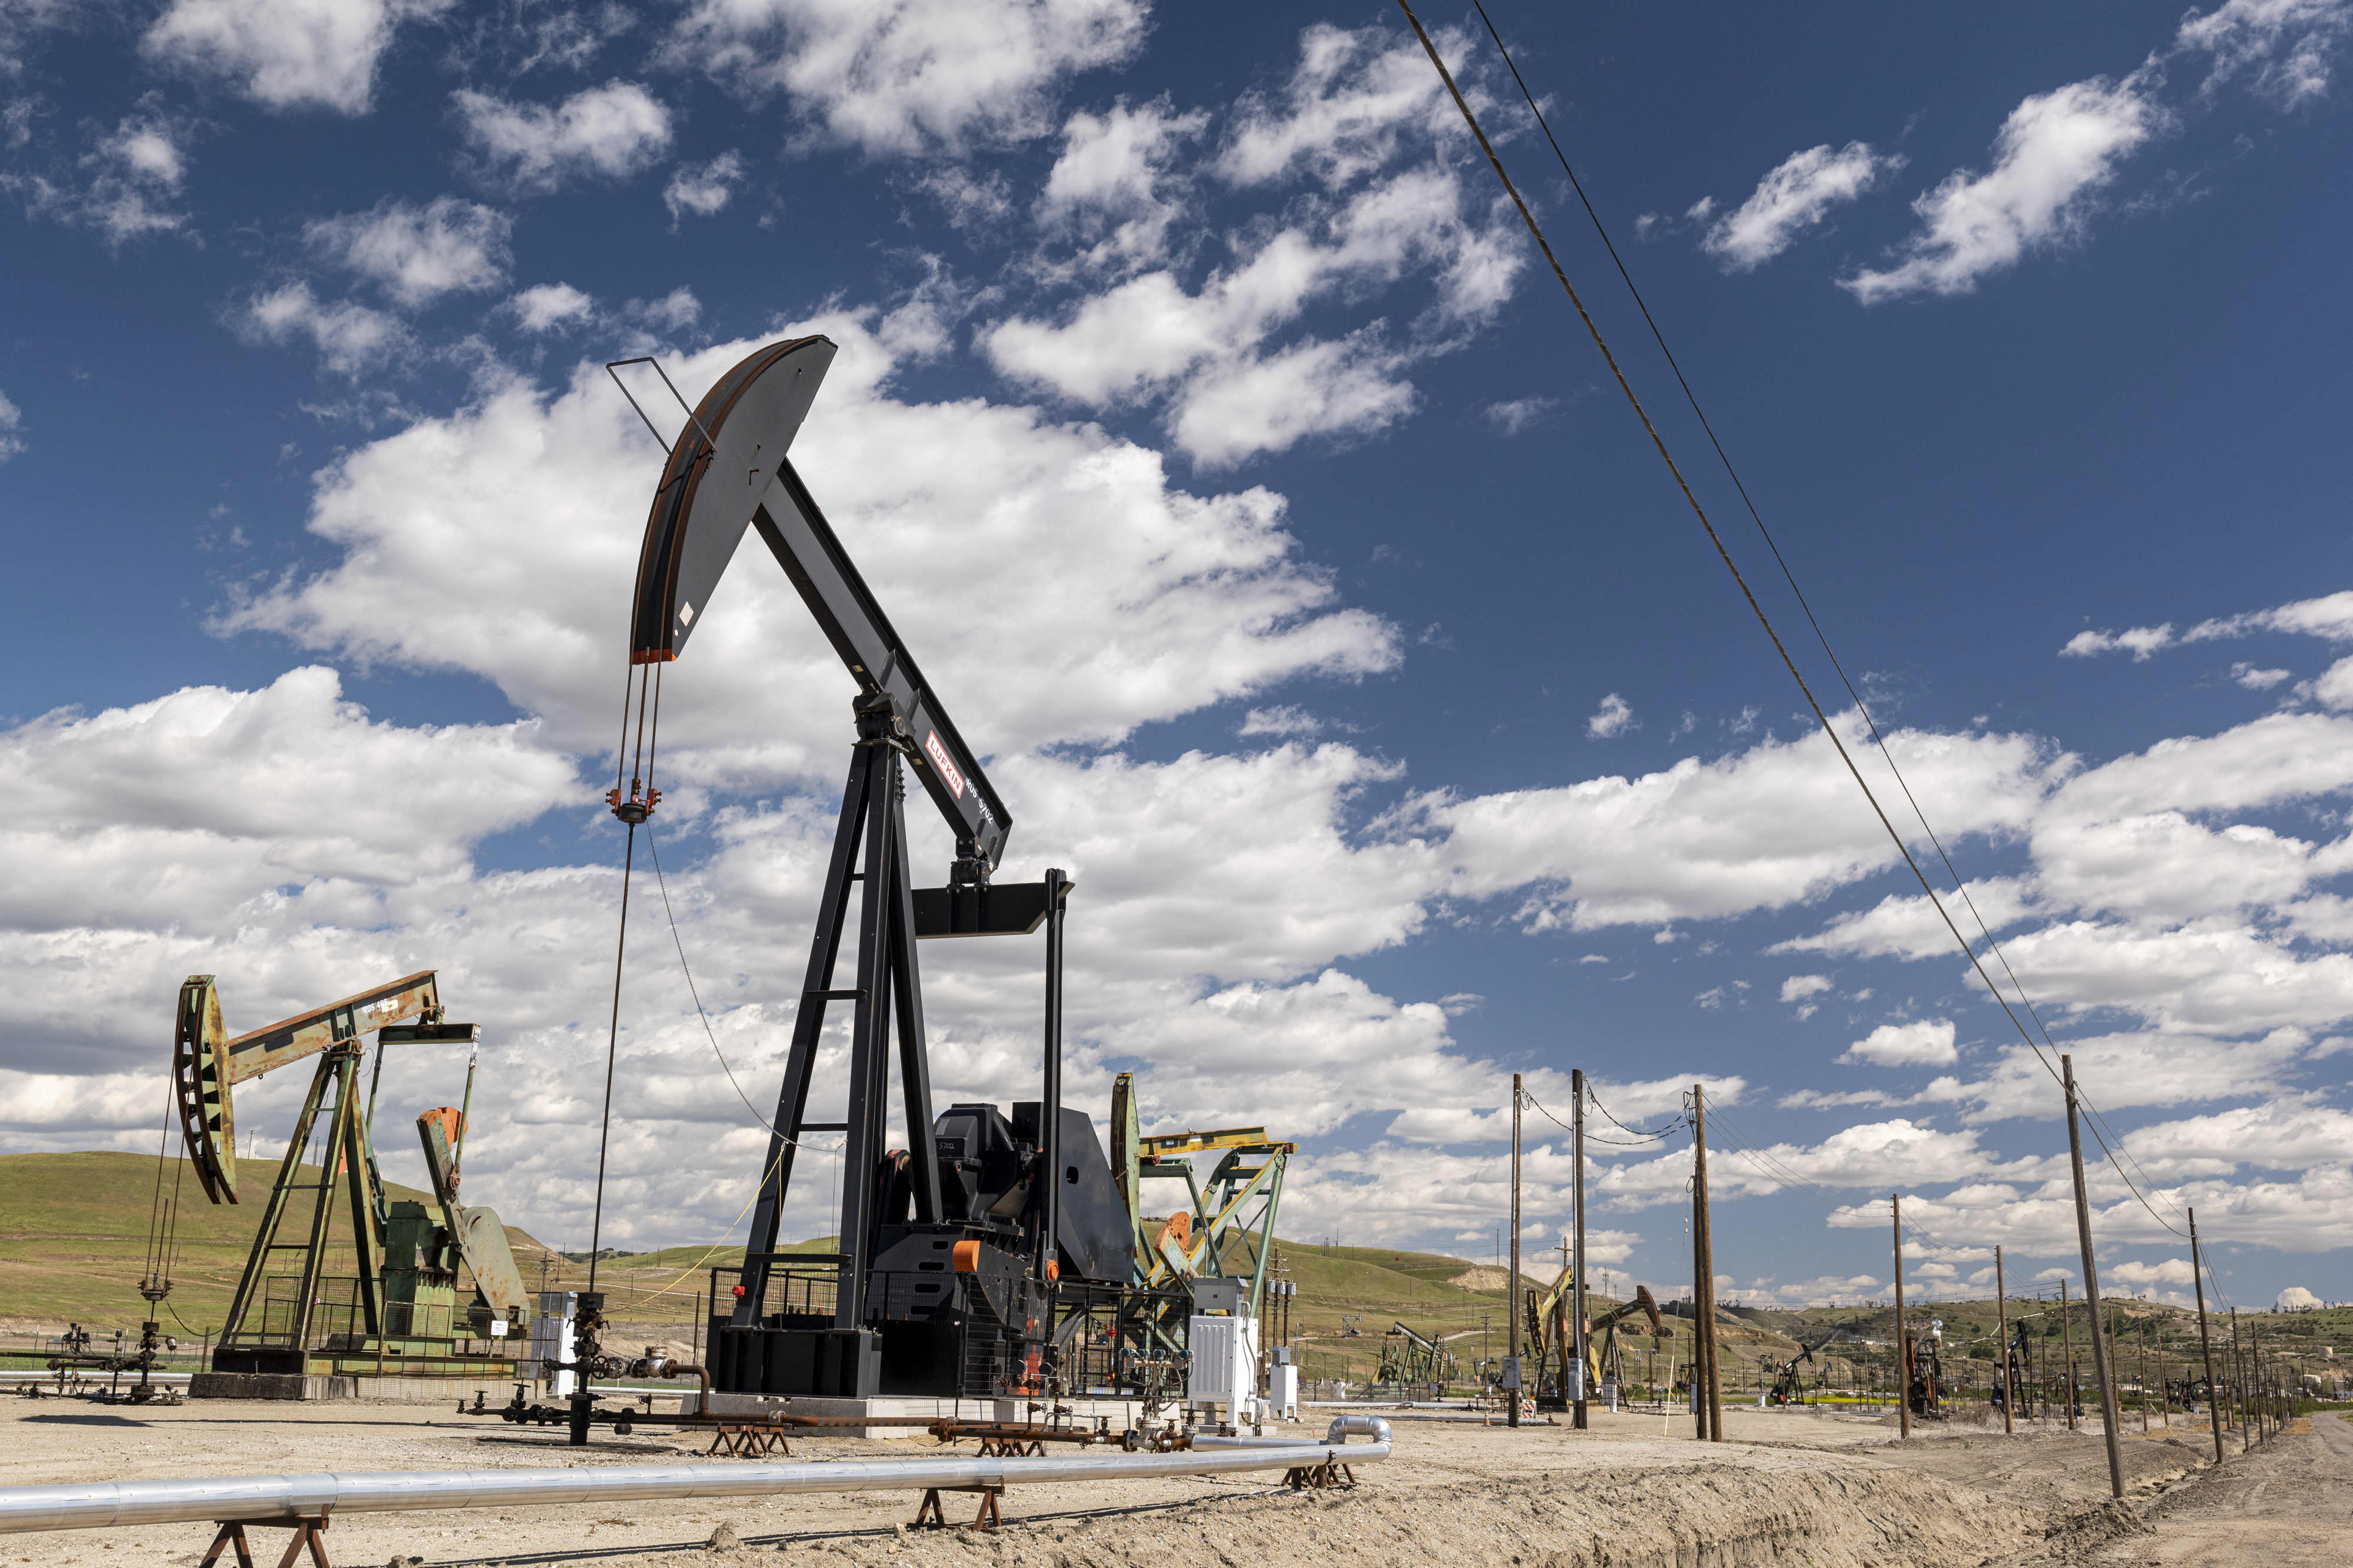 Exxon vs. Chevron? Goldman Sachs reveals its favorite — and other energy picks